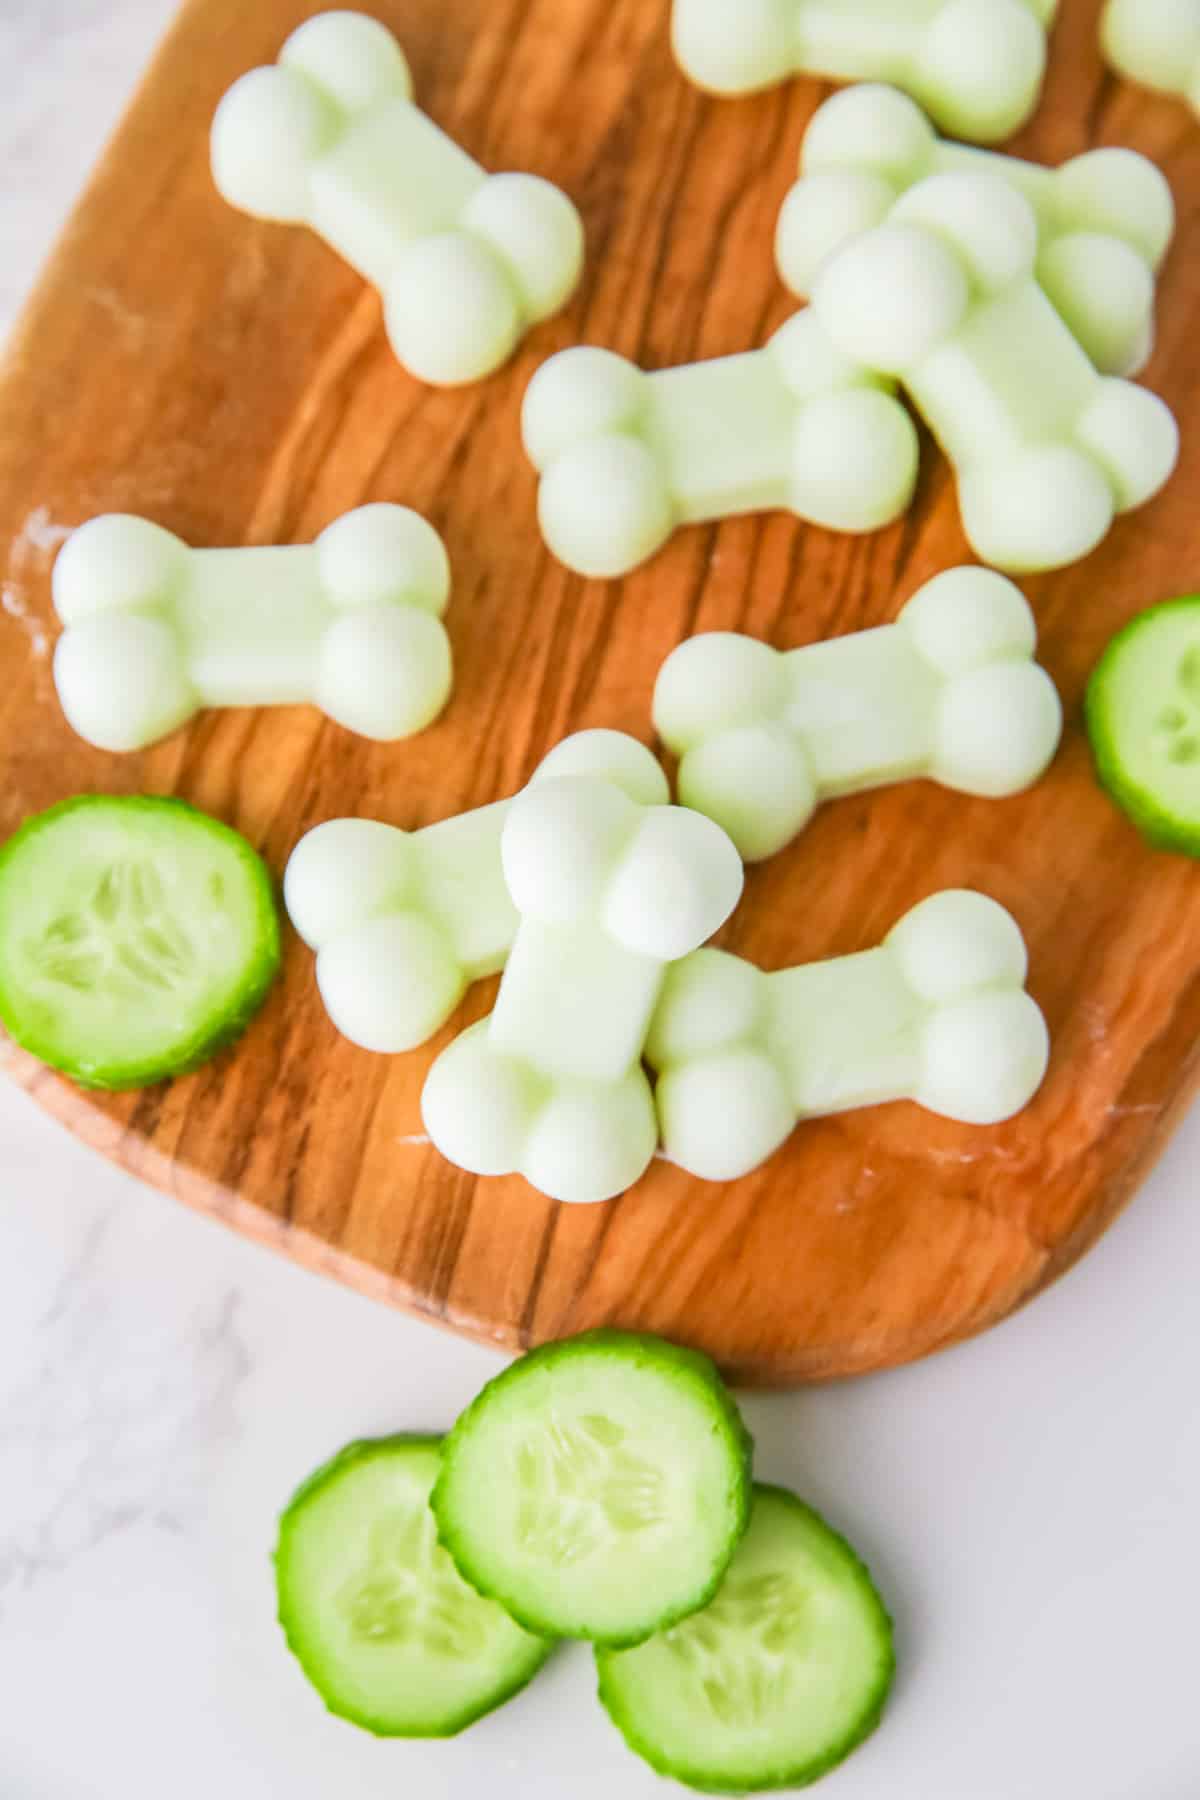 Bone-shaped yogurt cucumber dog treats and slices of cucumber on a wooden cutting board.